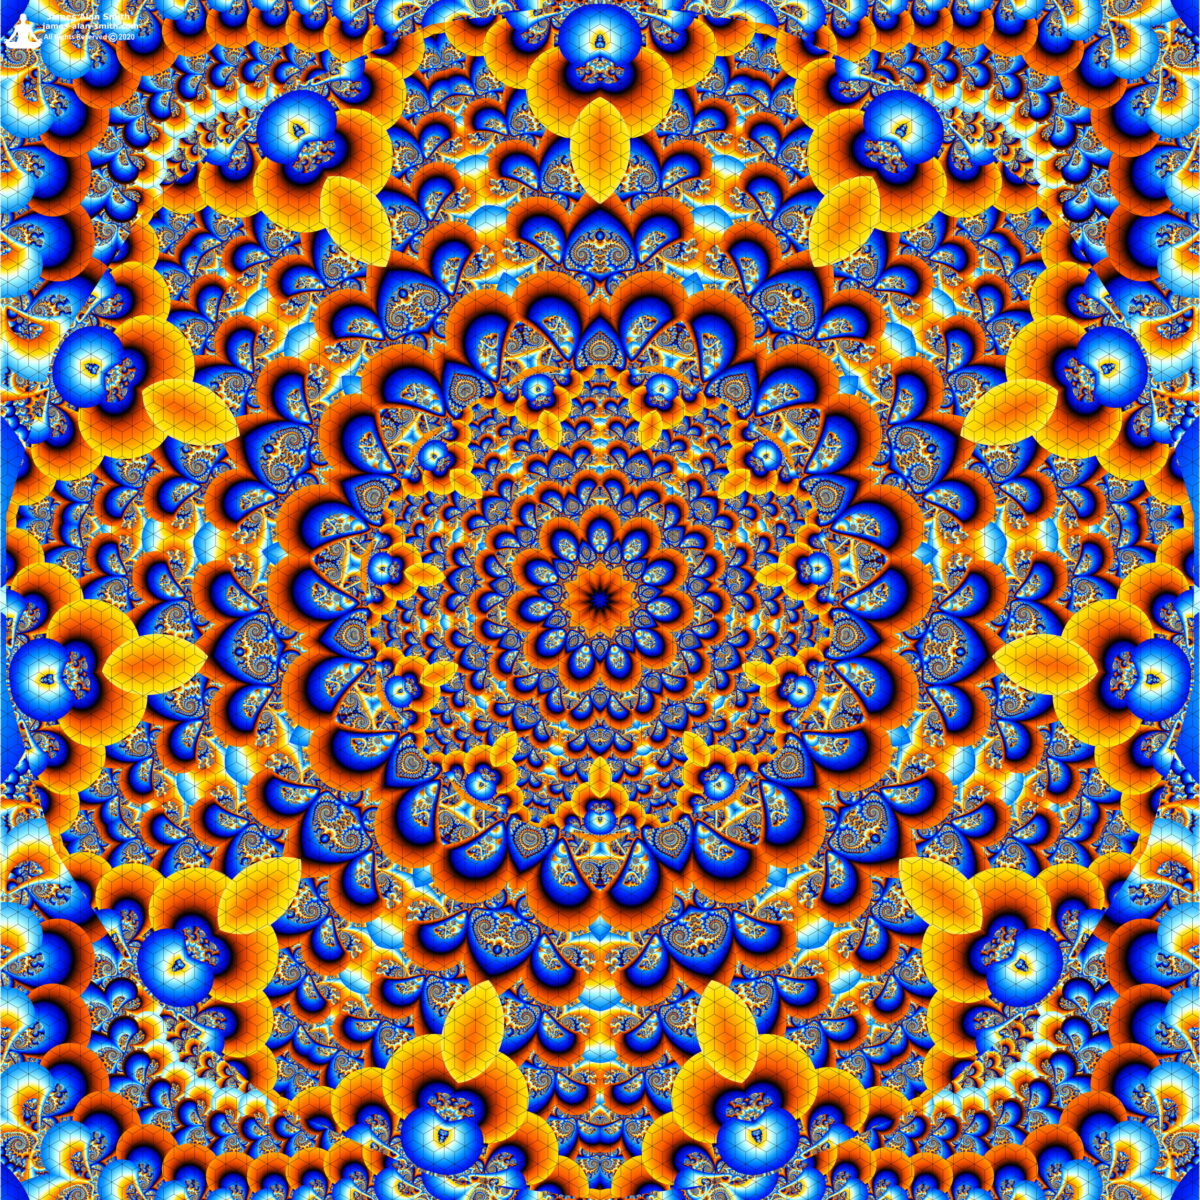 Unusual Mandala Series #07232020: Artwork by James Alan Smith